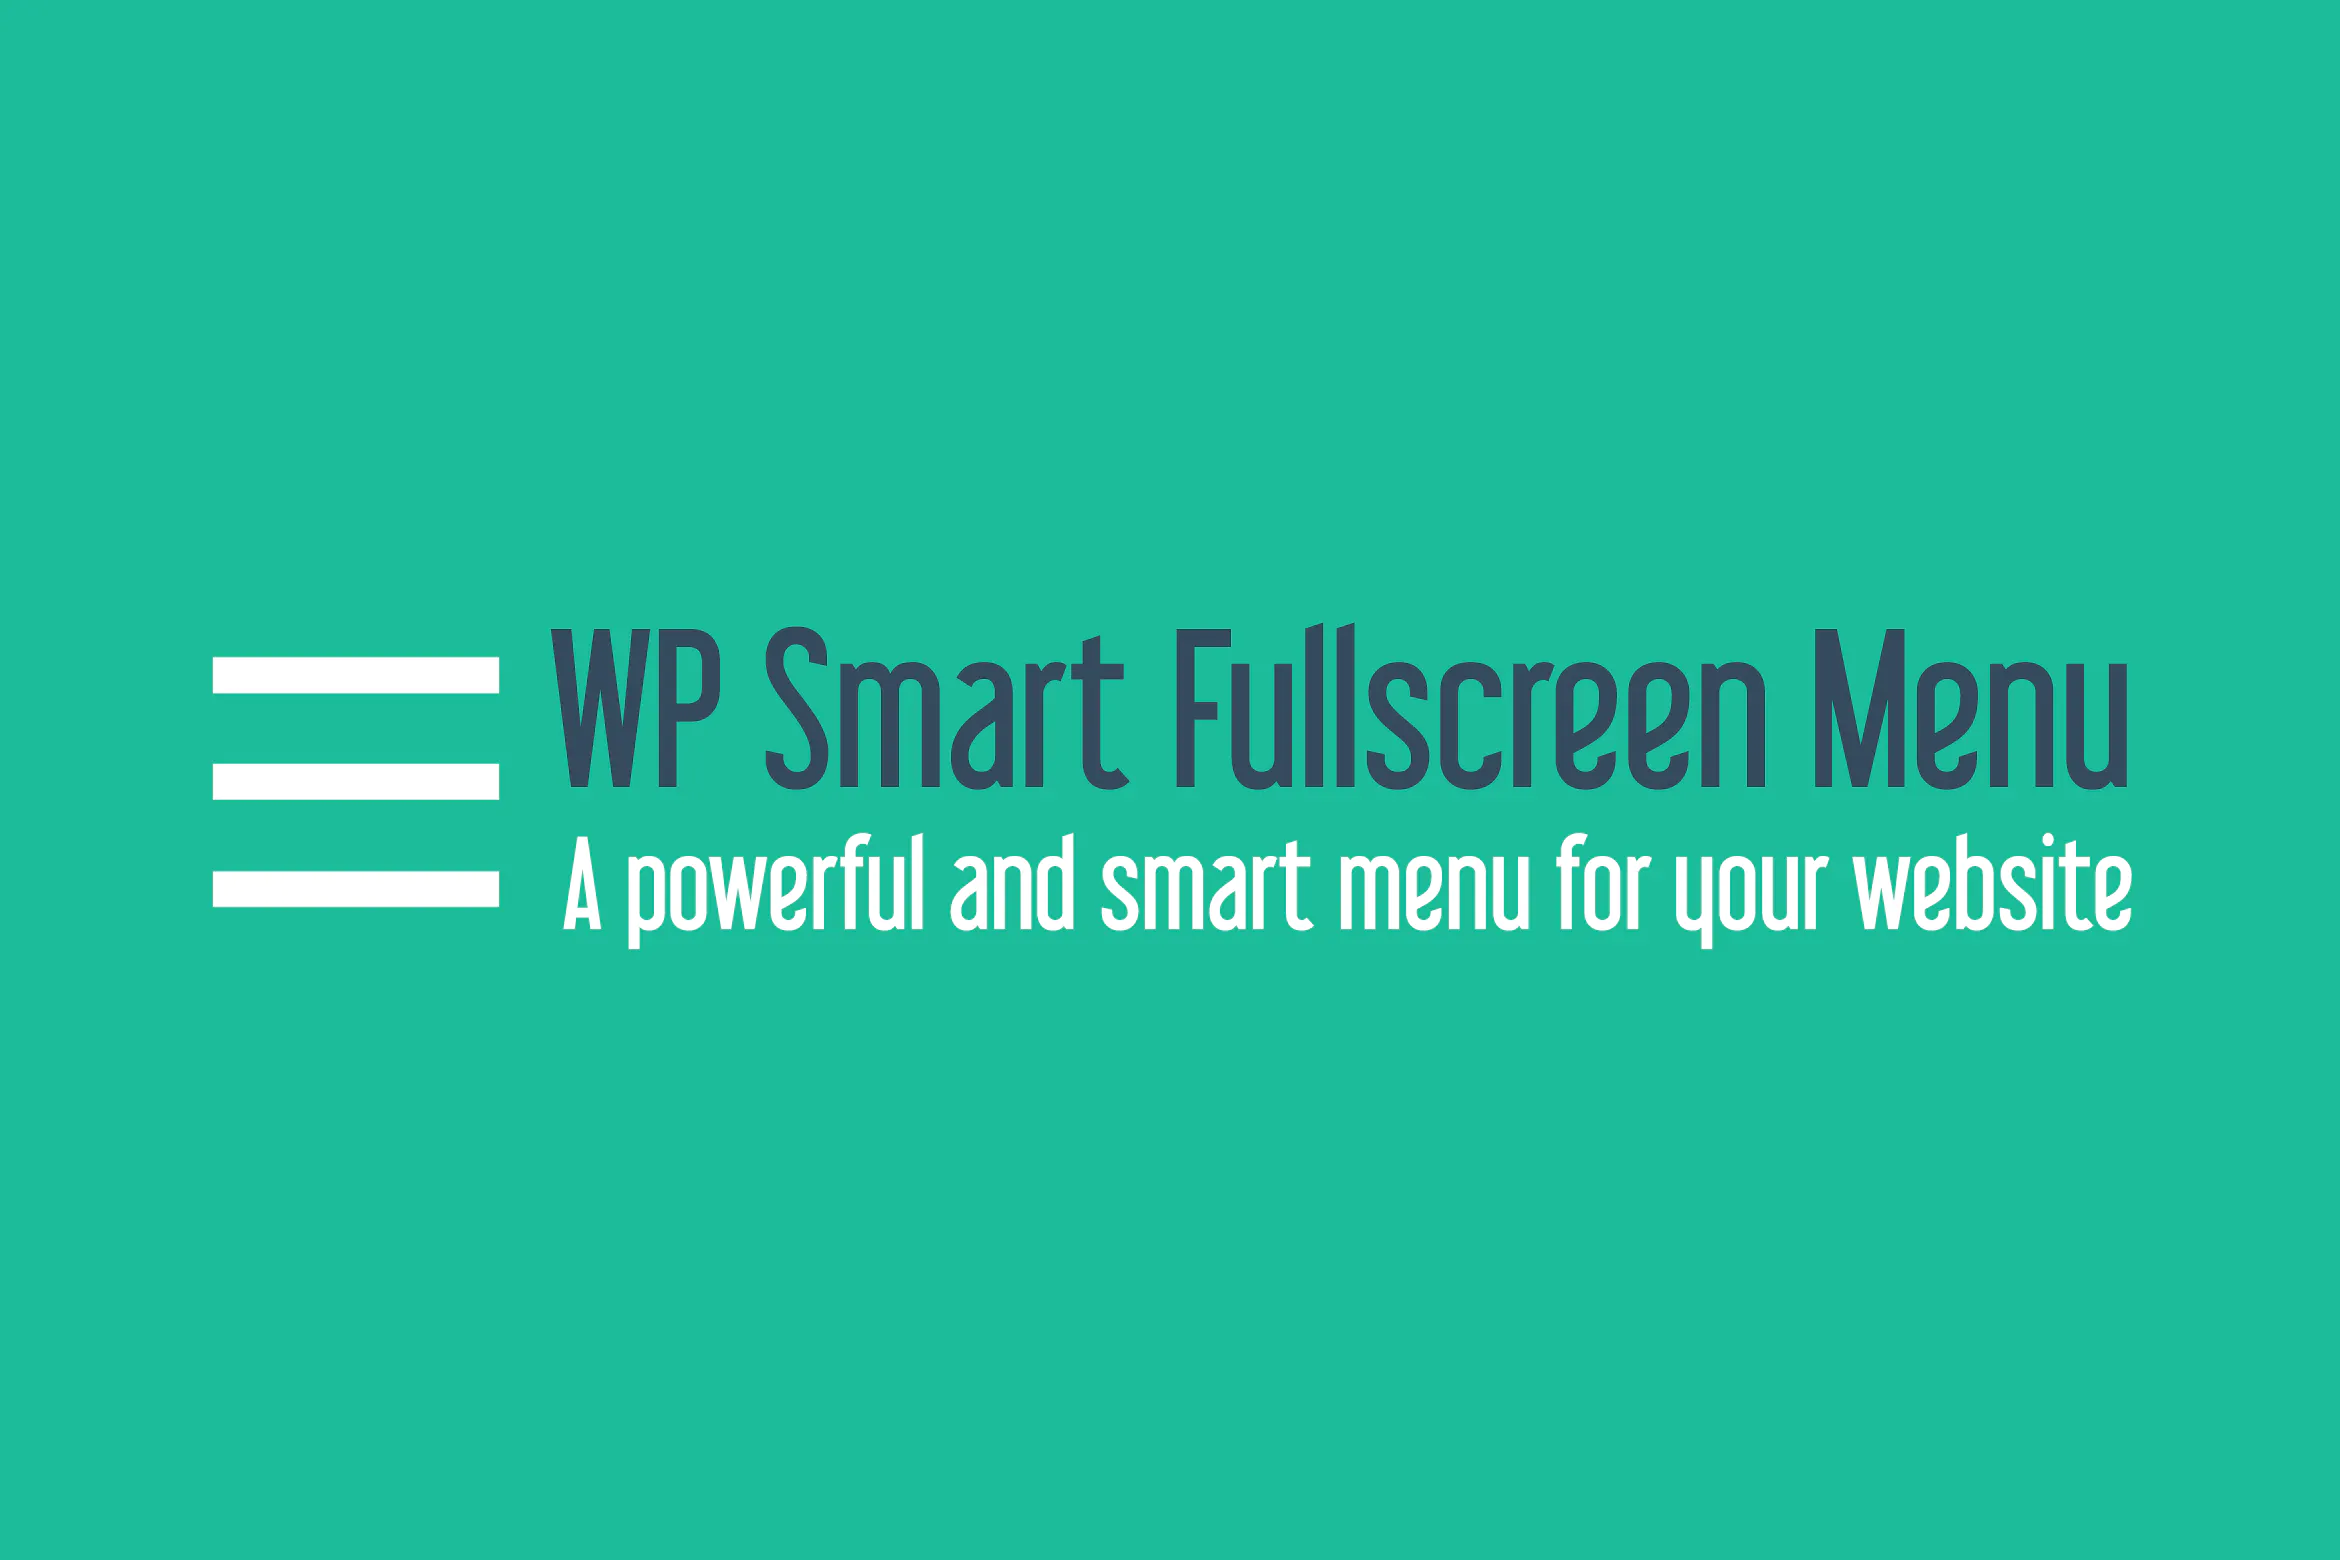 WP Smart Fullscreen Menu插图